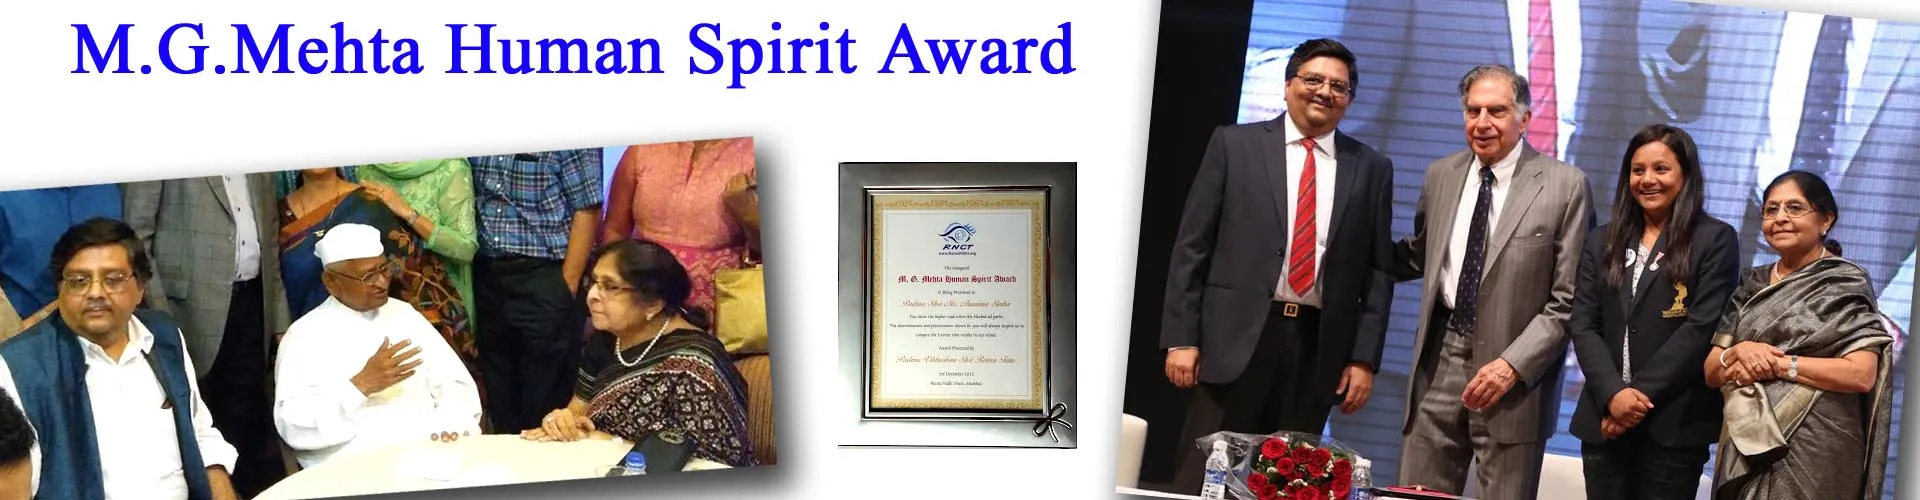 M.G. Mehta Human Spirit Award - Ratna Nidhi Charitable Trust